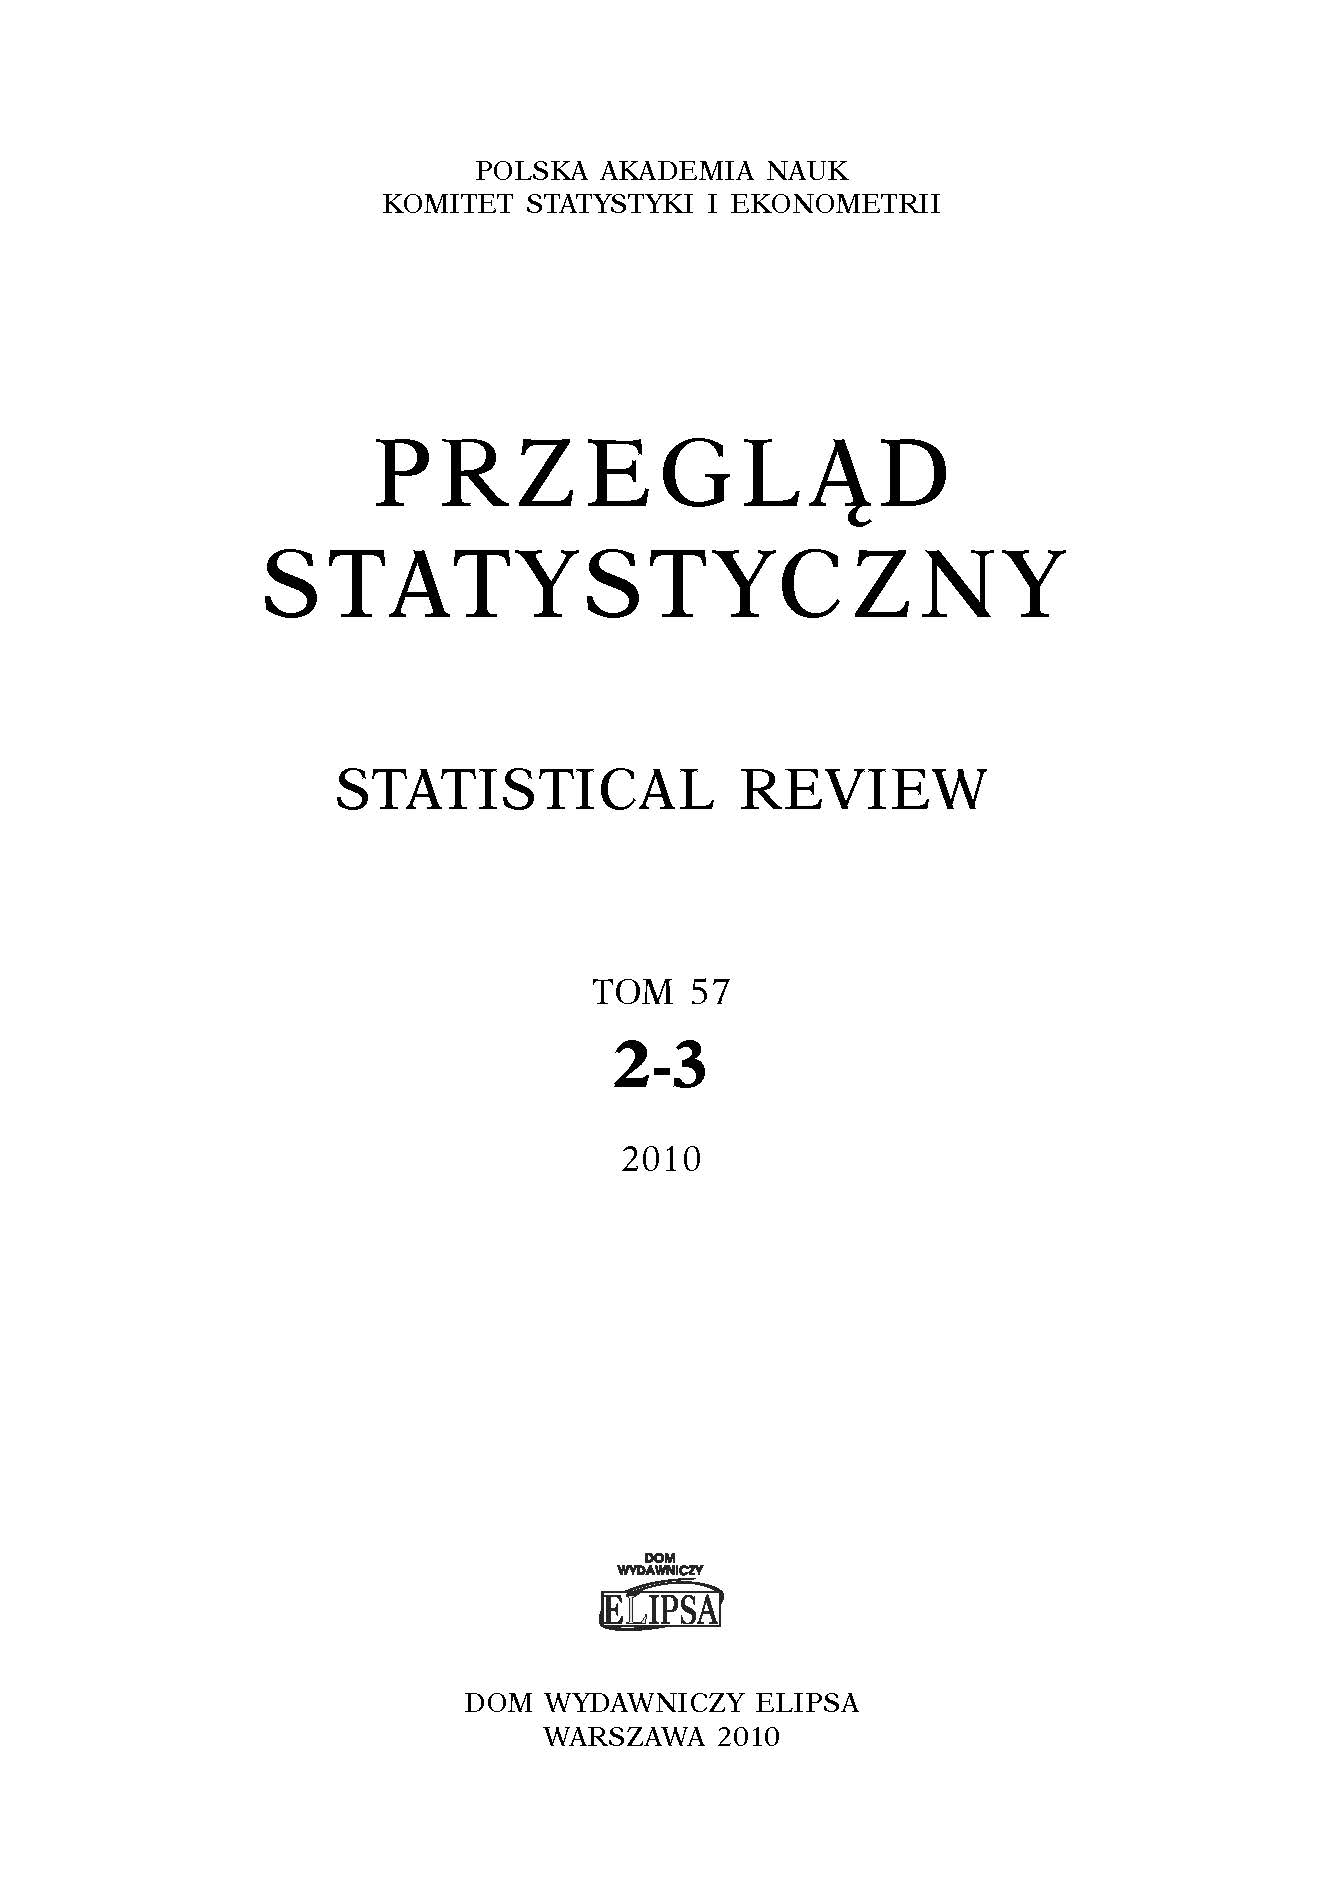 The life and work of Professor Zofia Zarzycka (1925-2010) Cover Image